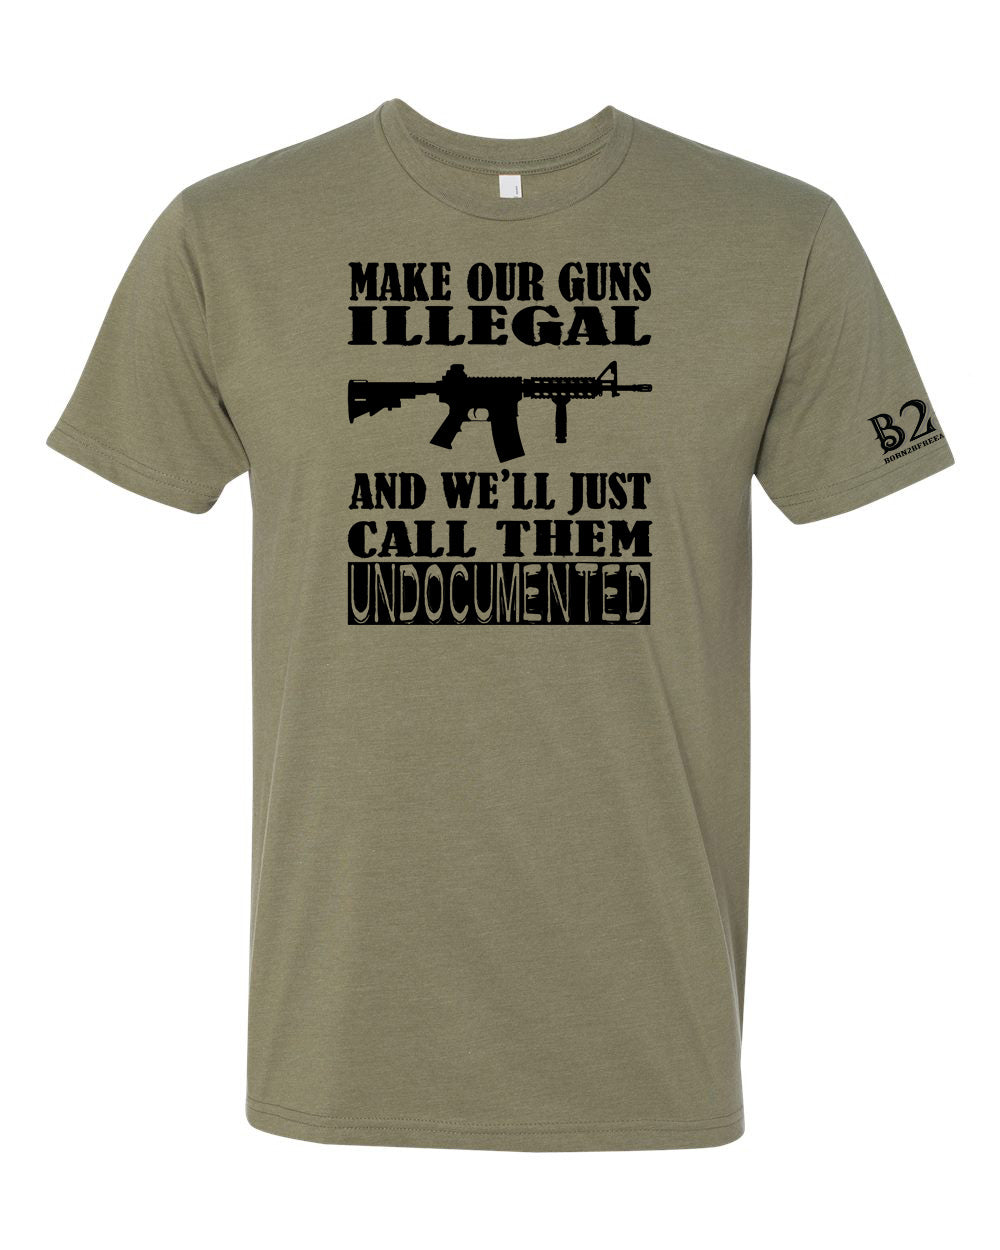 Undocumented Guns